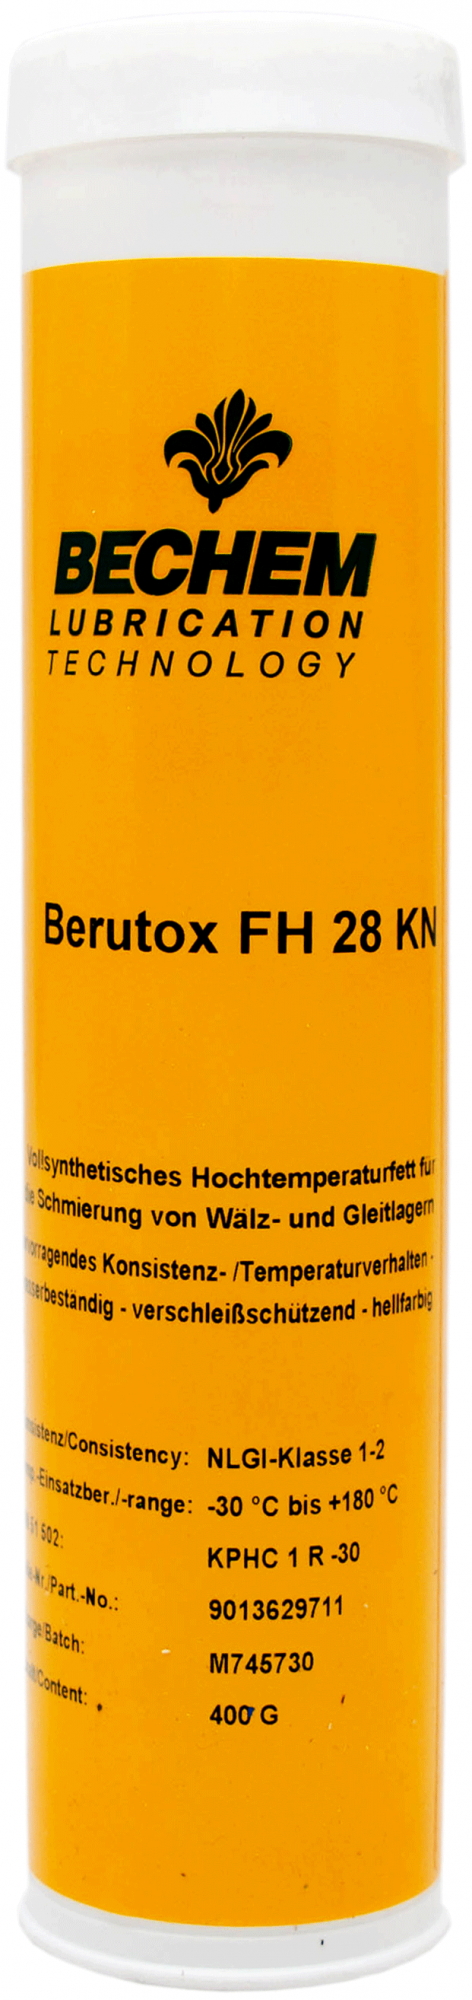 Пластичная смазка BECHEM Berutox FH 28 KN